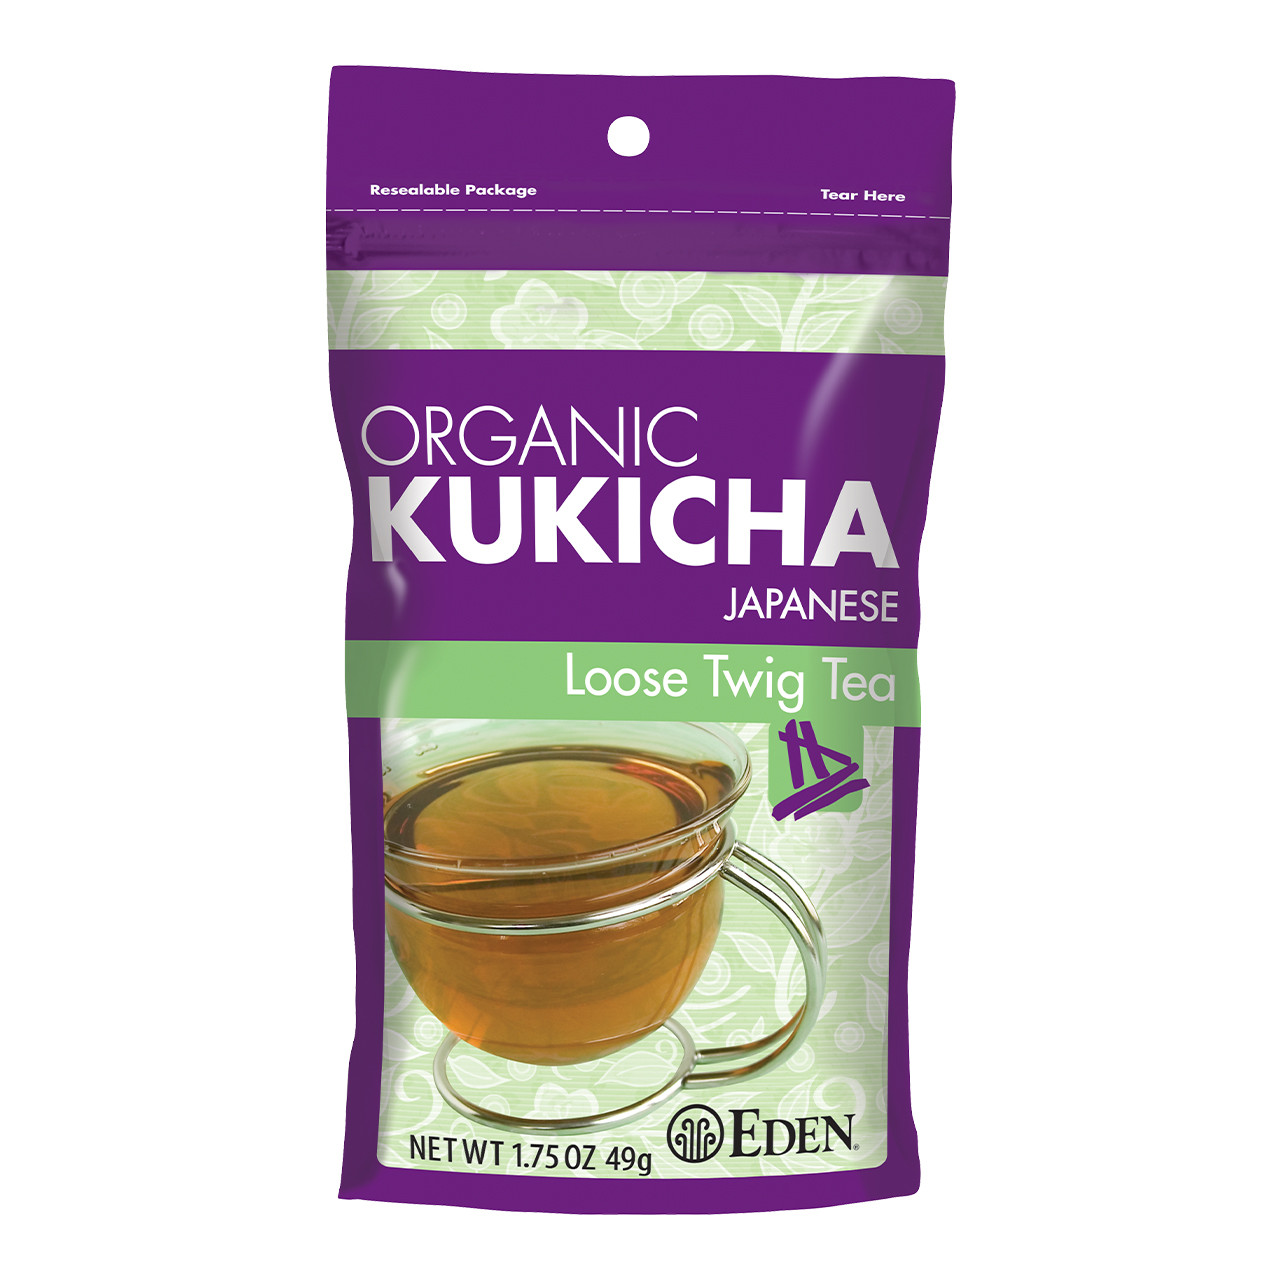 Kukicha Twig Tea, Organic - Loose 1.75 oz